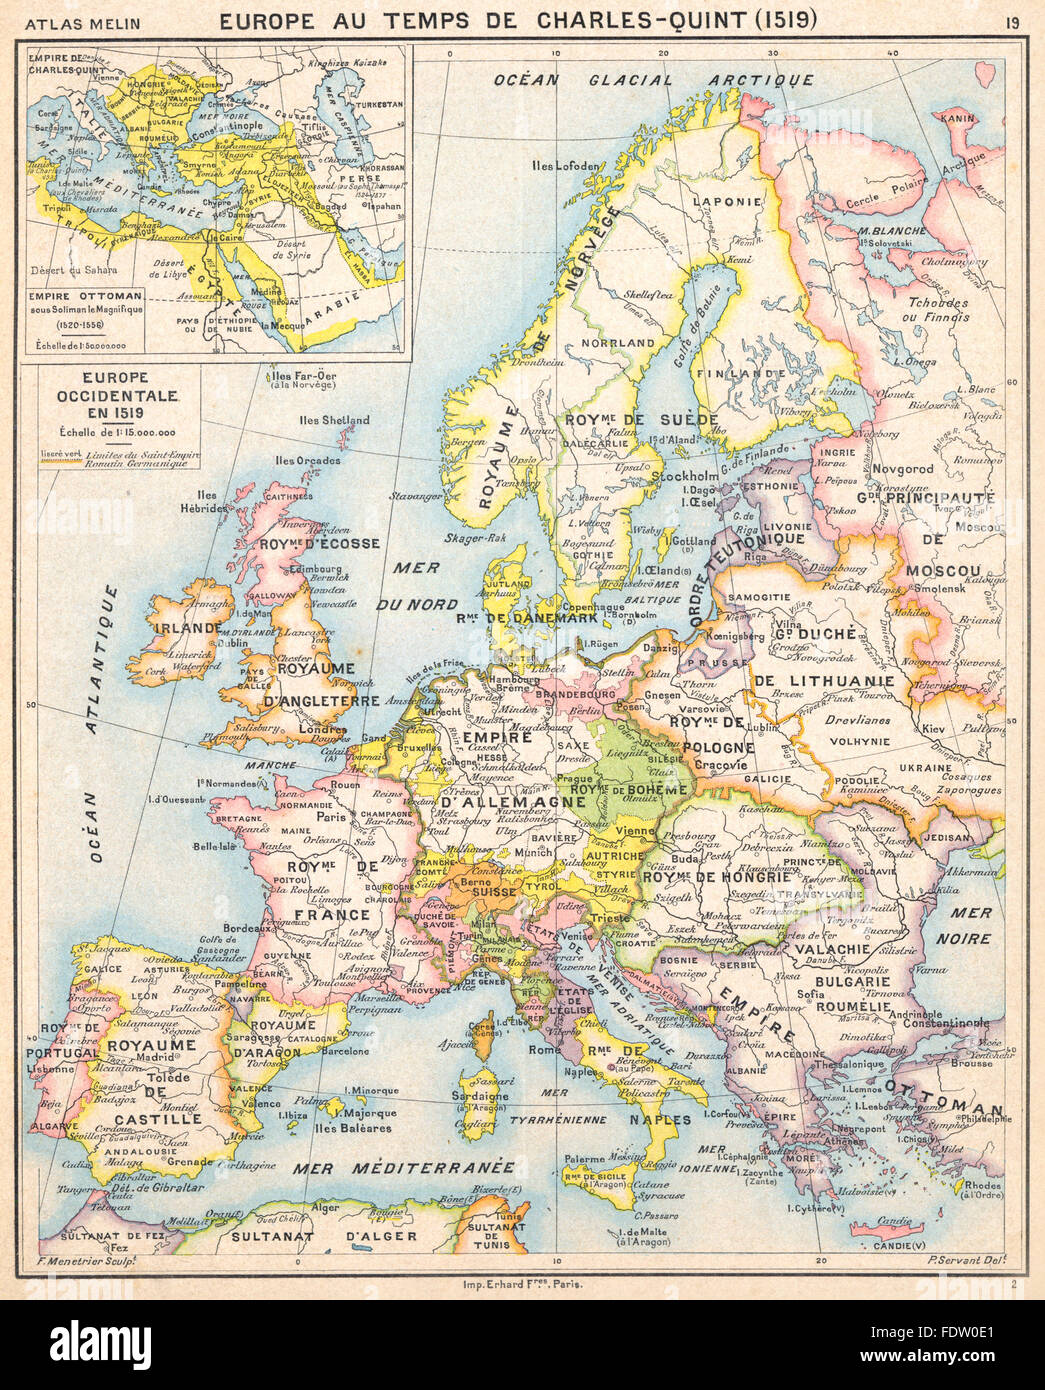 Europe Temps De Charles Quint 1519 Inset Empire Ottoman 15 1556 1900 Map Stock Photo Alamy